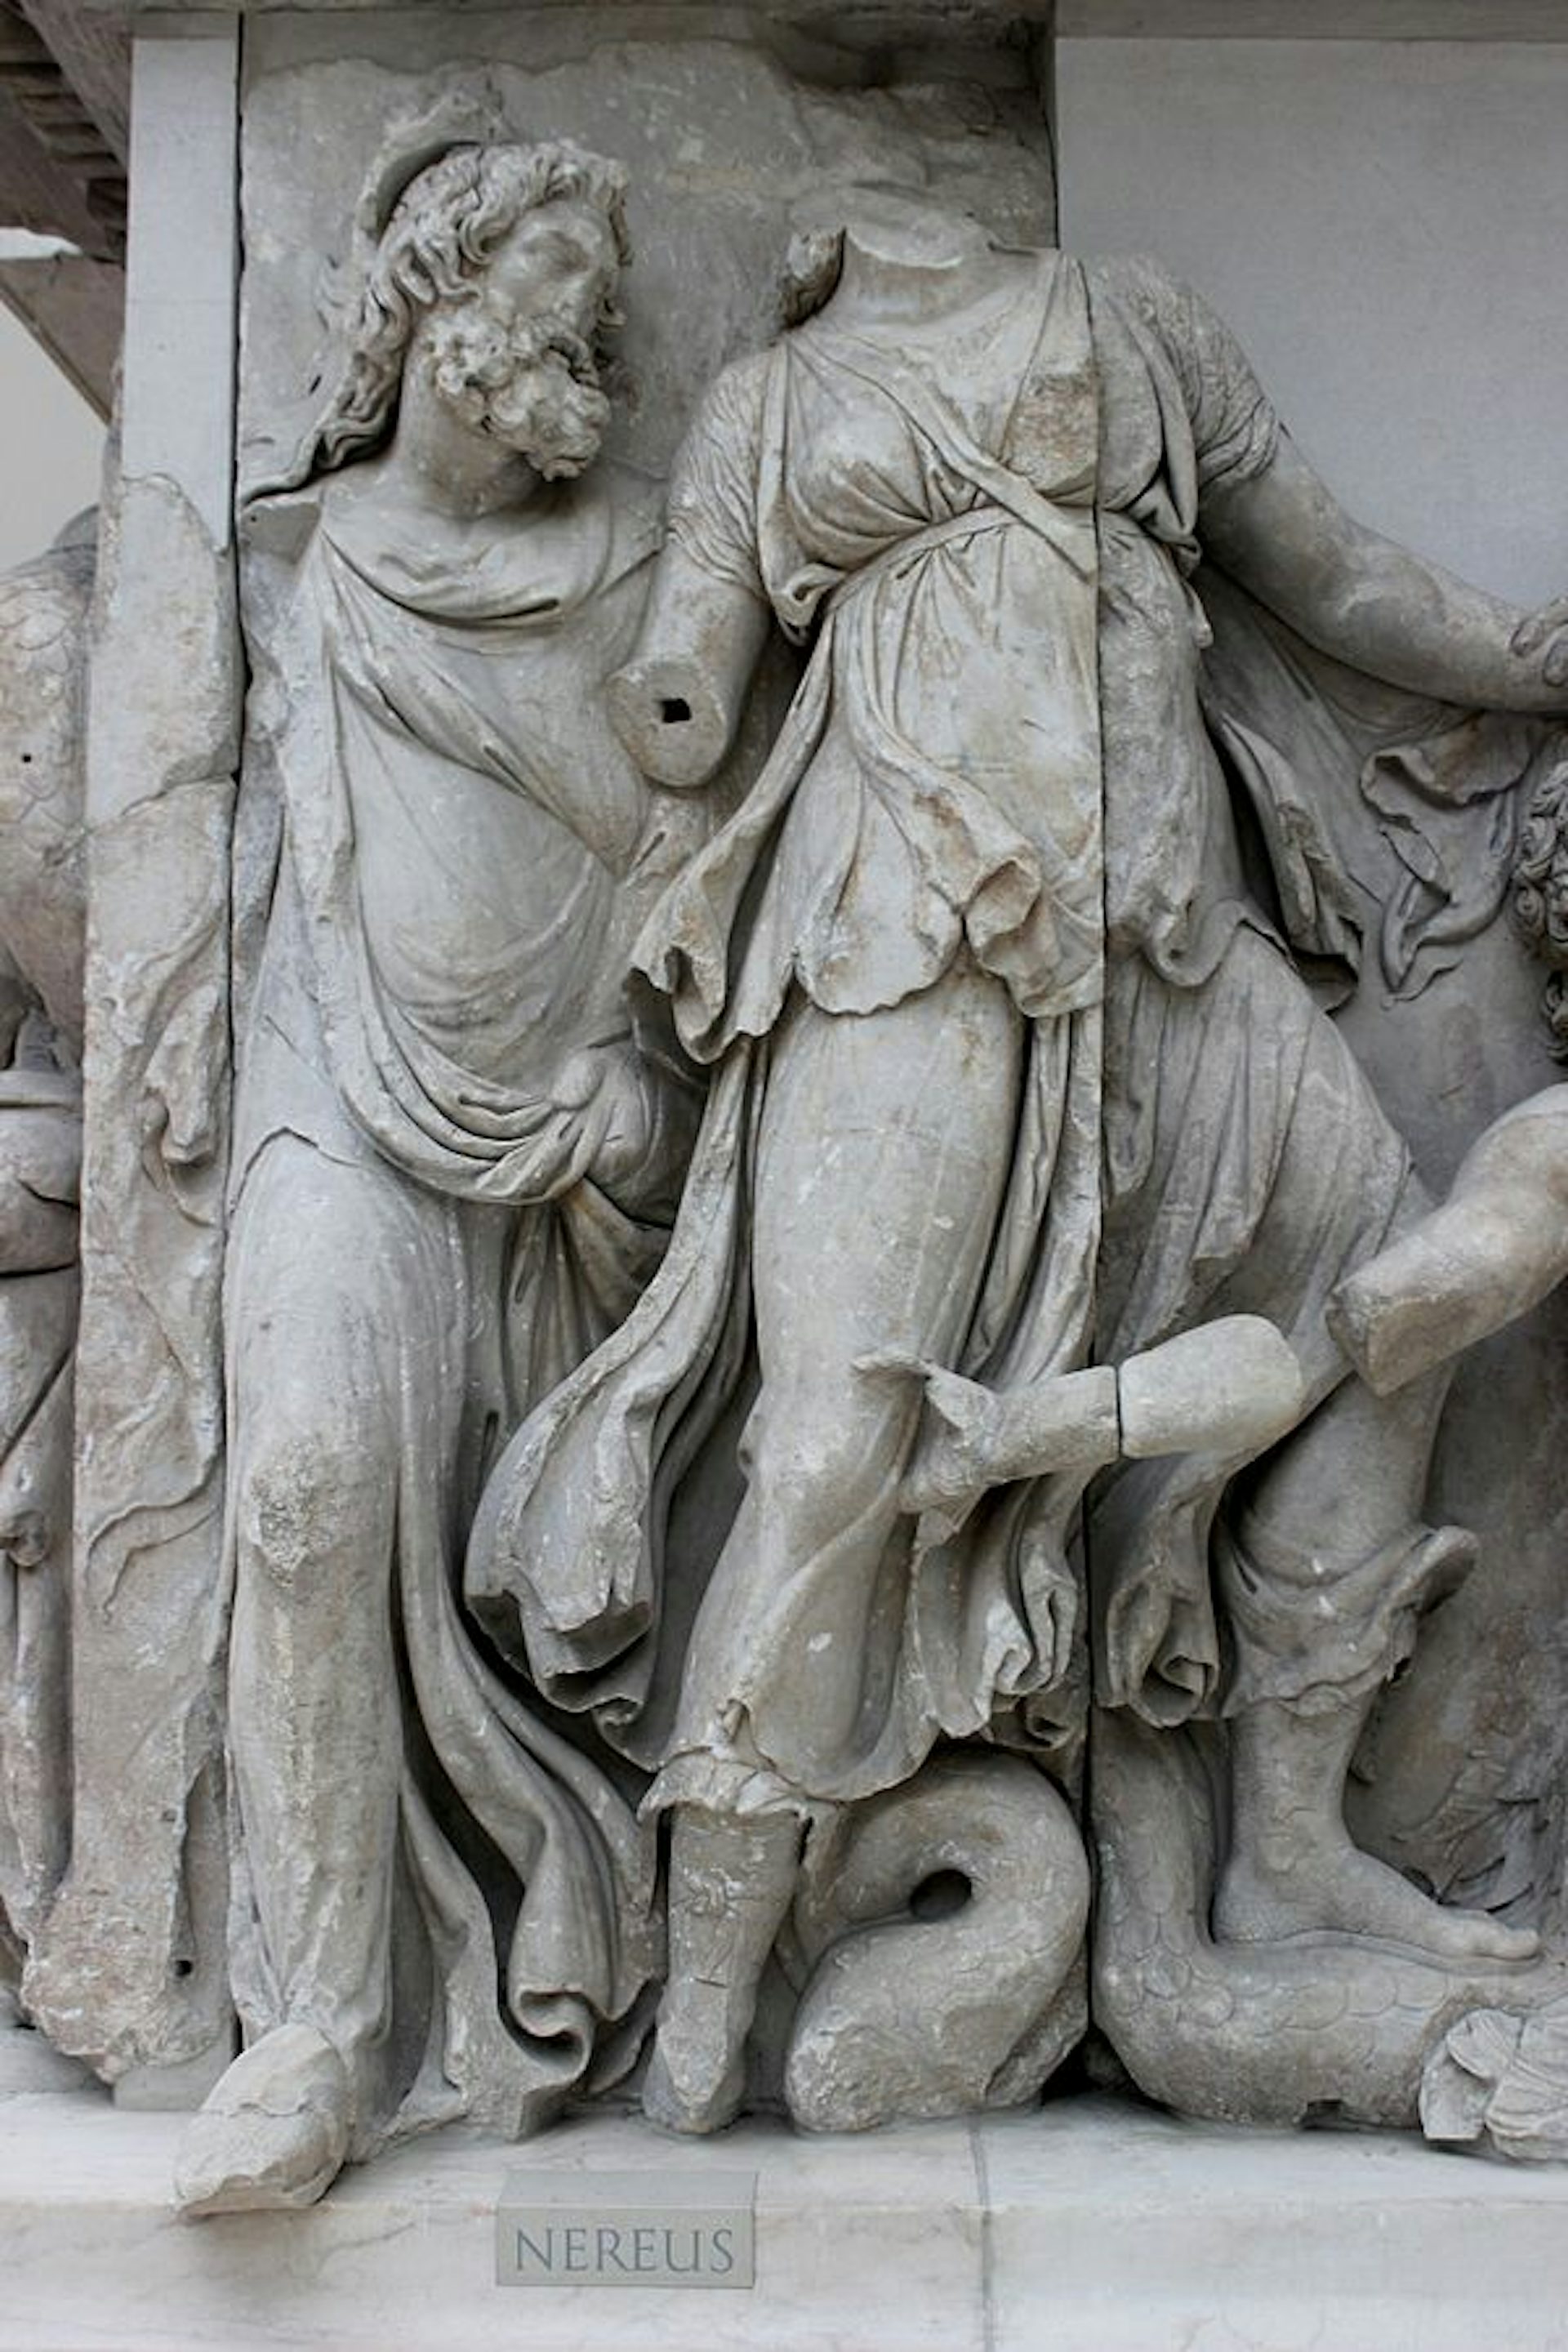 Relief sculpture of Nereus, the father of the Nereids